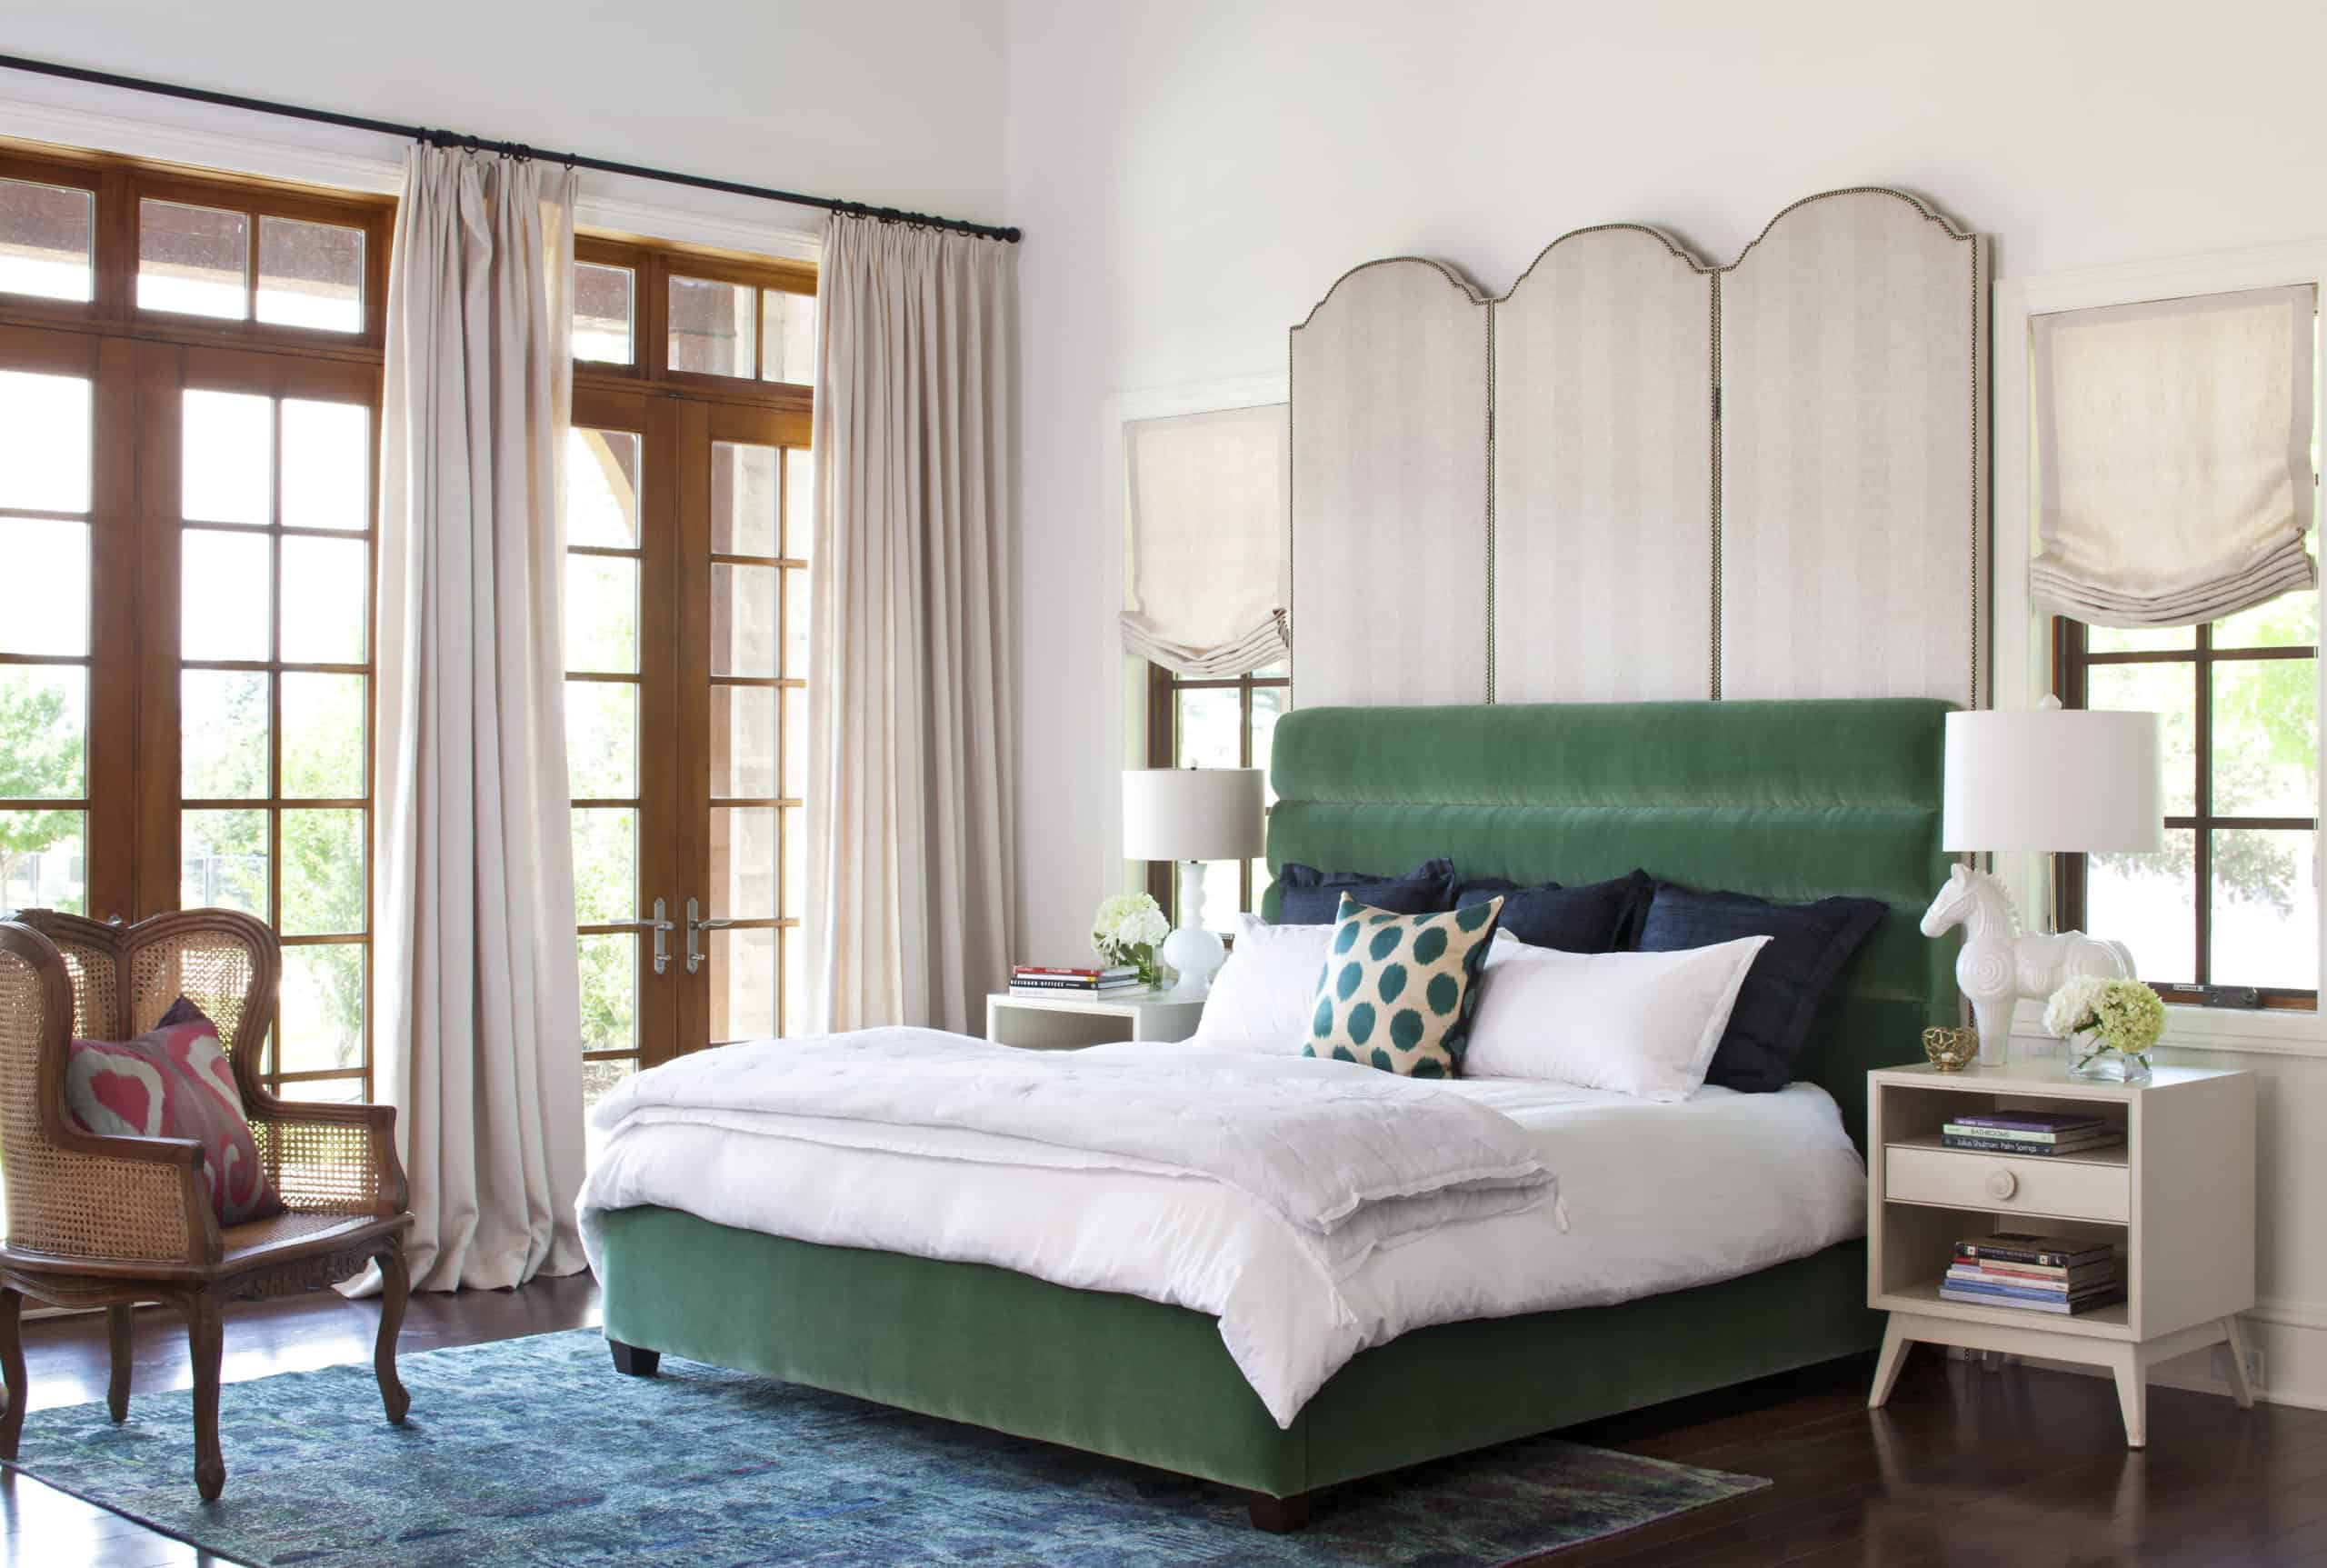 Custom Emerald Green Bed with High Headboard in Bright Comfortable Bedroom